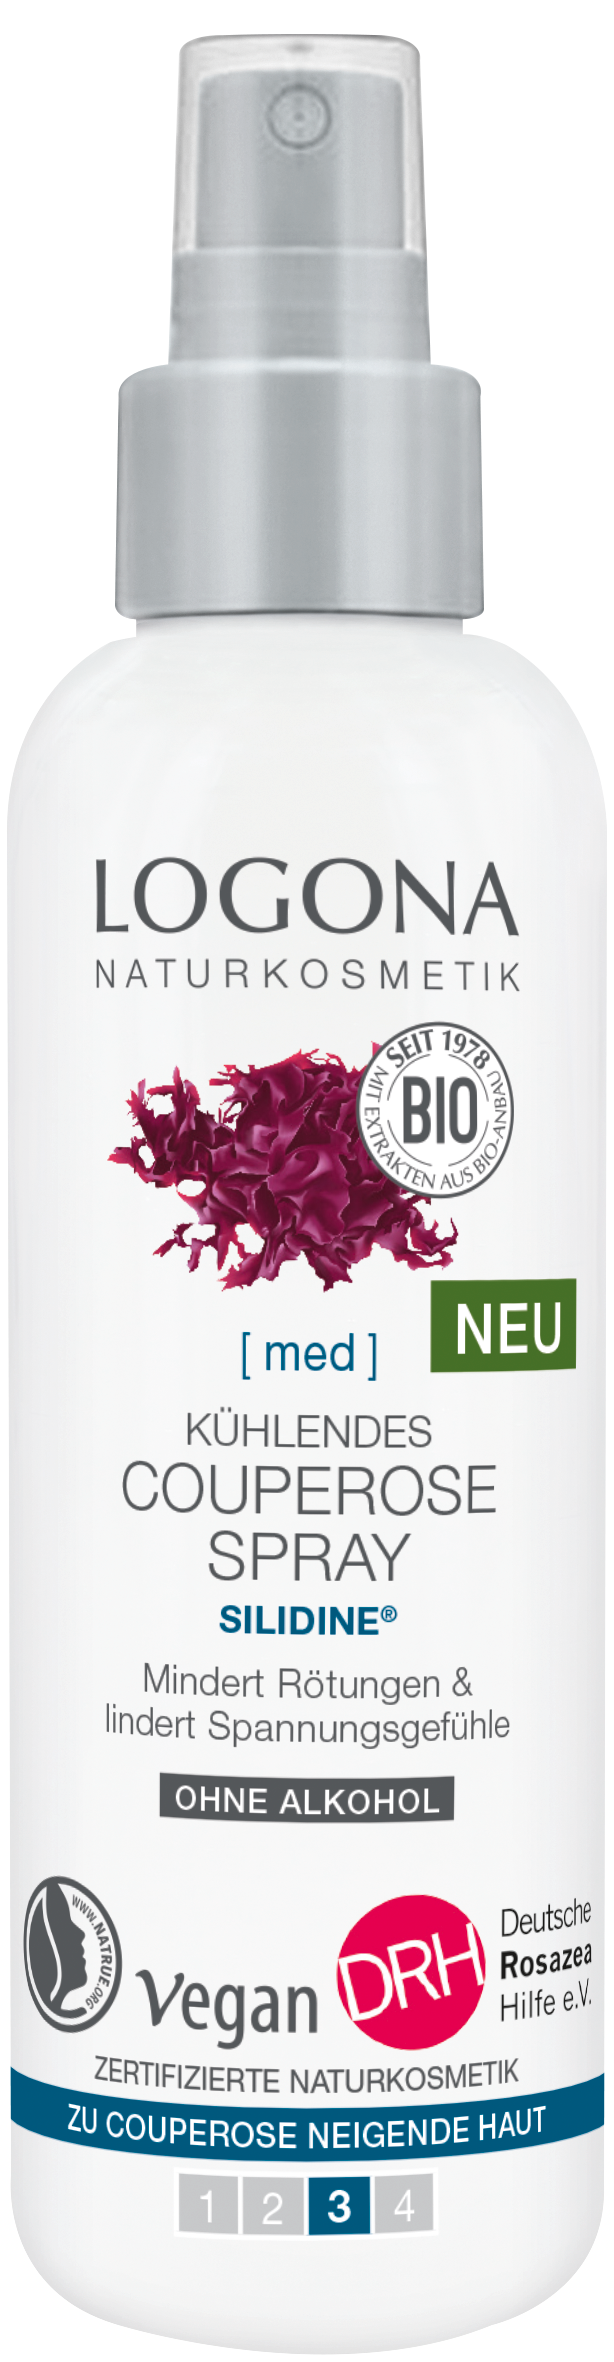 Logona Kühlendes Couperose Spray SILIDINE® 125 ml | NATRACTIV Bio  Naturkosmetik Onlineshop | Körpersprays